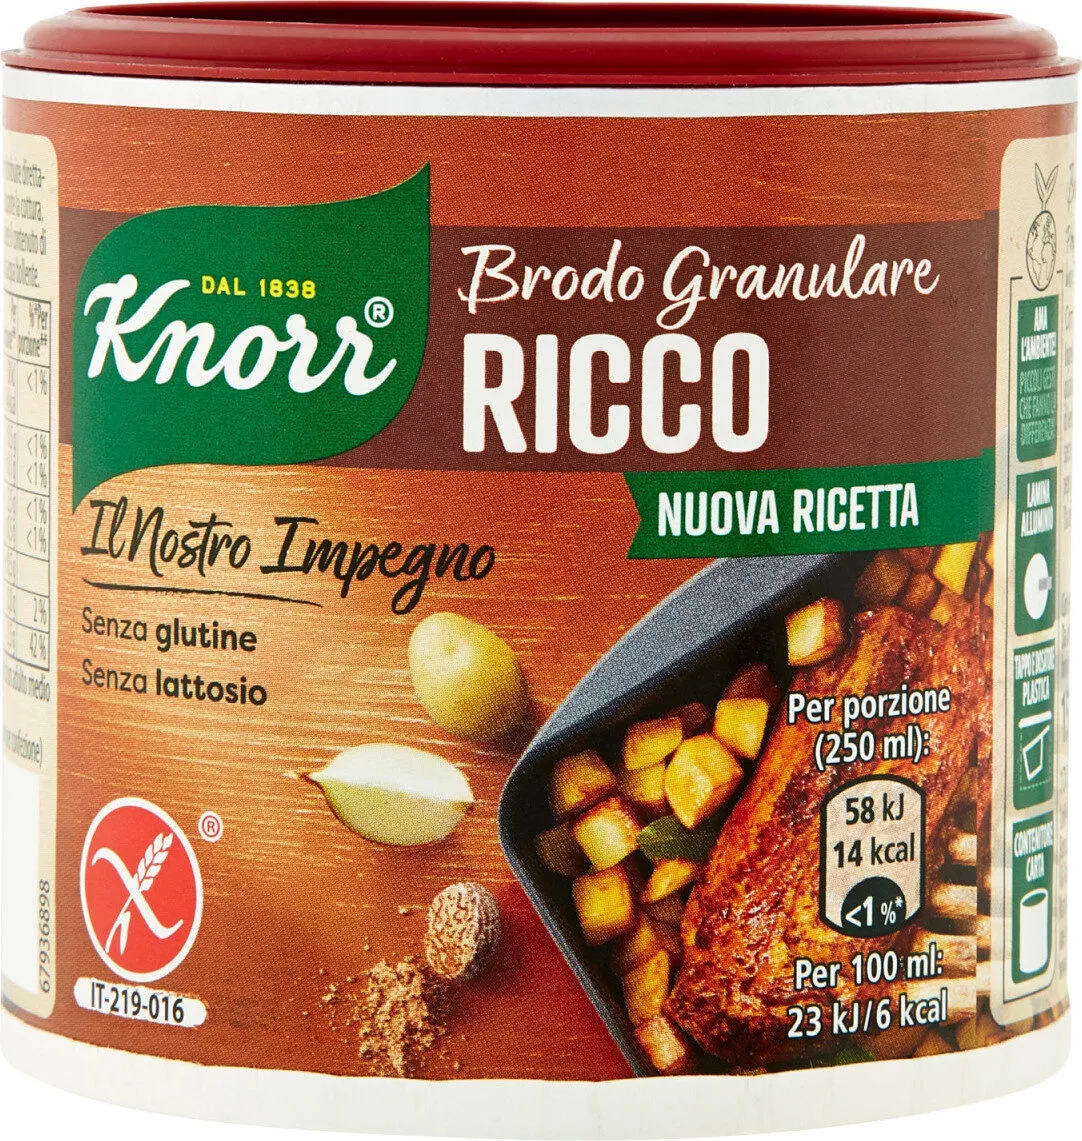 Condiment Knorr Ricco